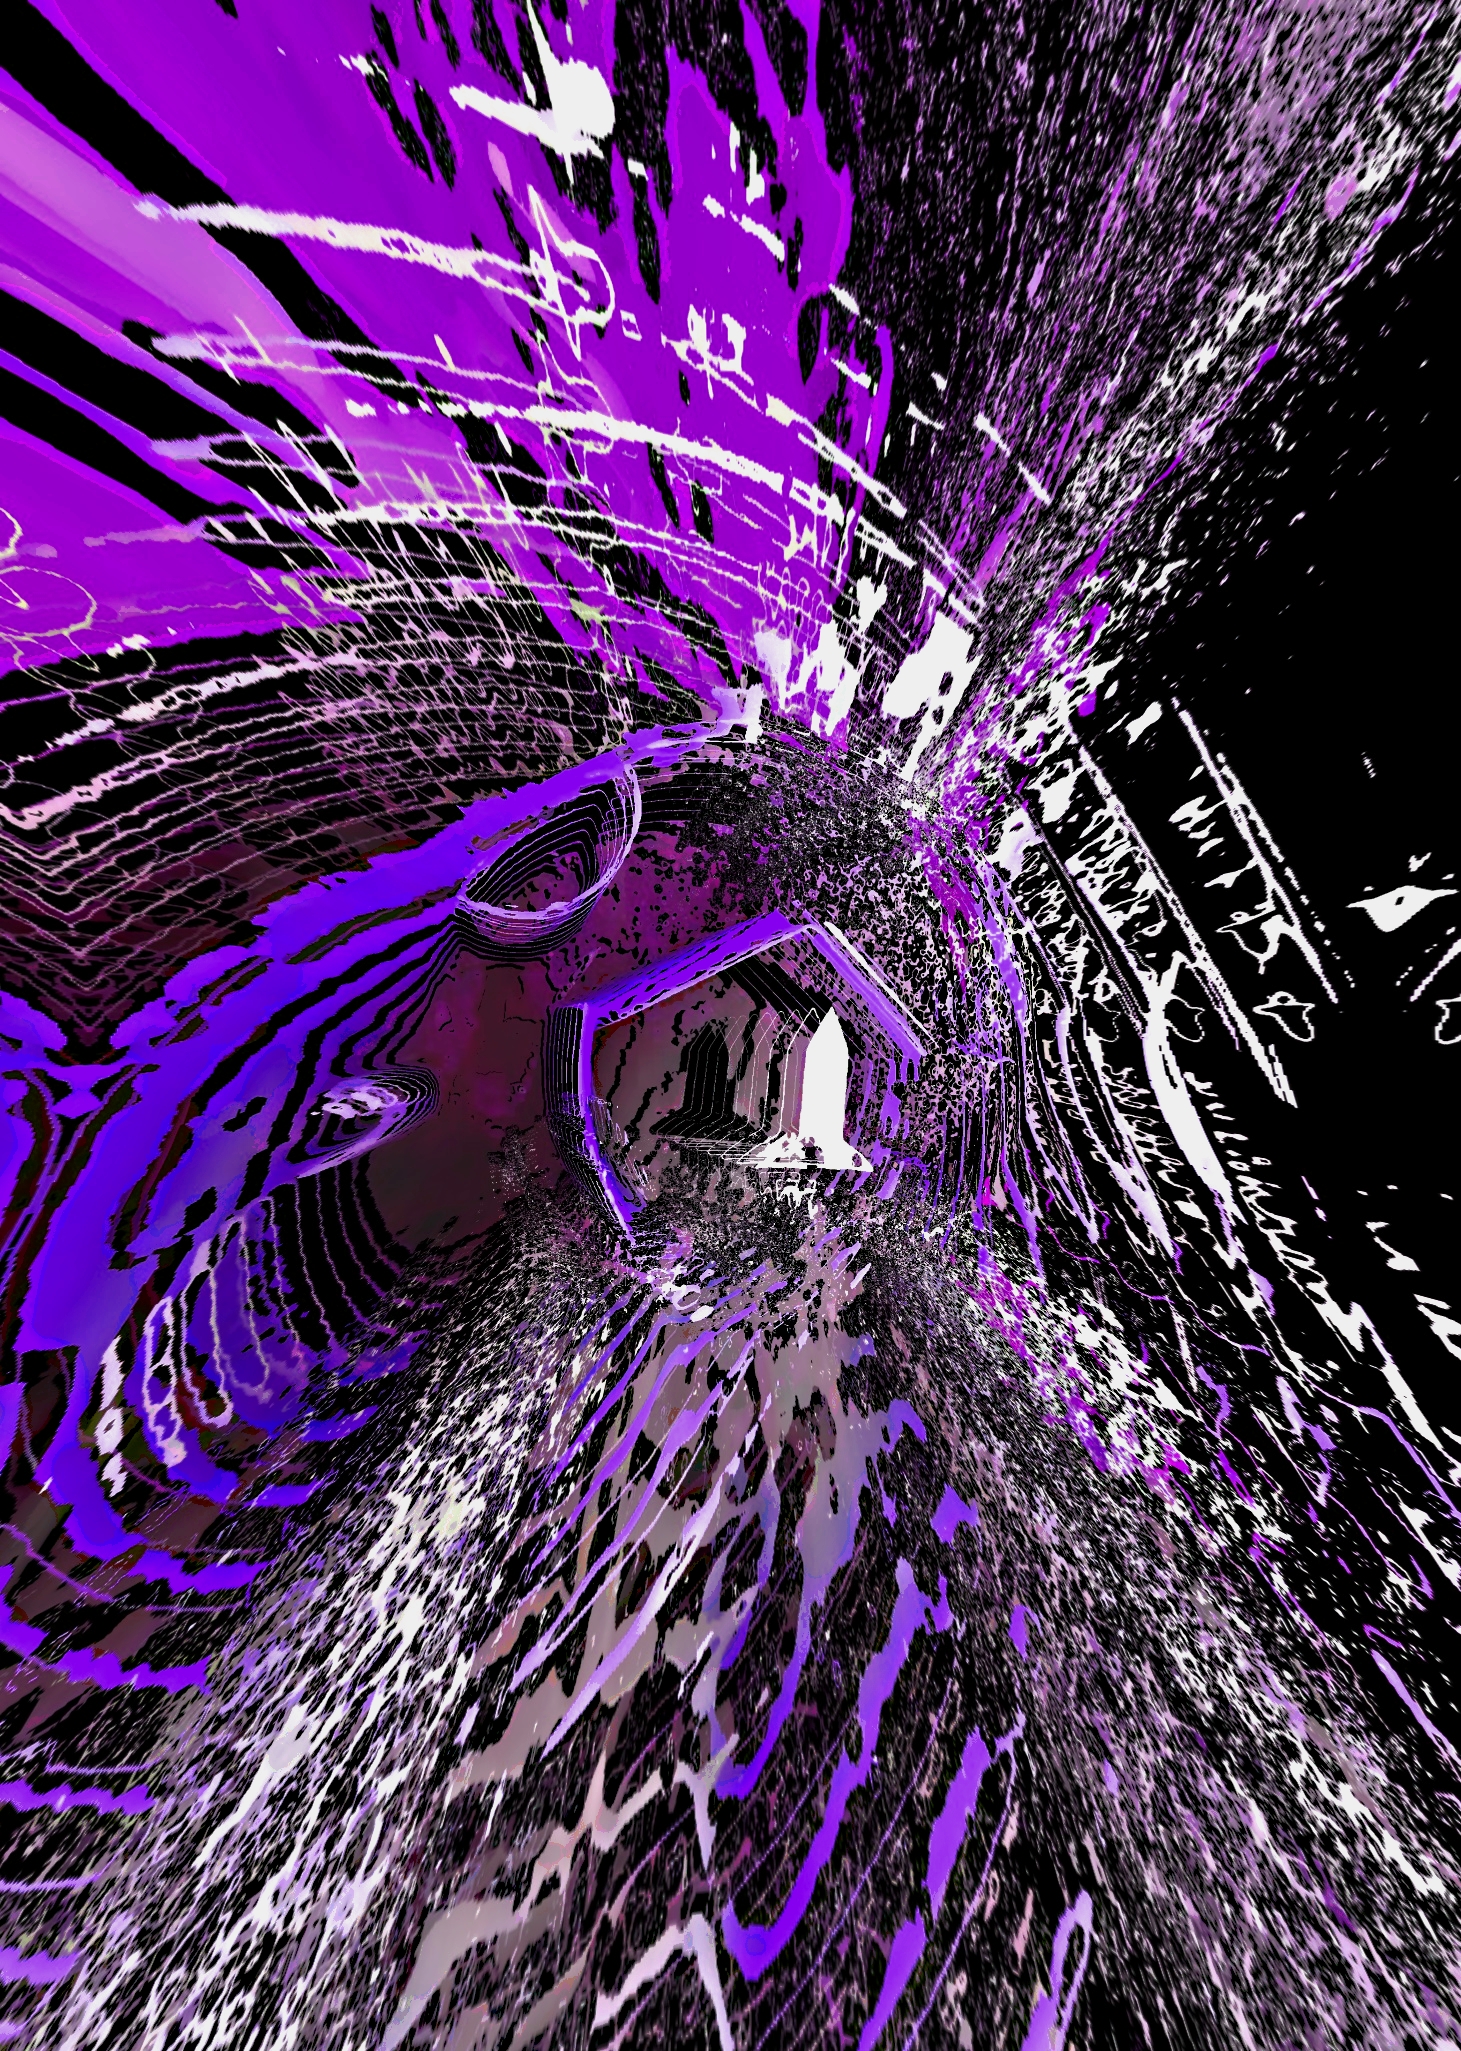 Nft Safemoon purple wave